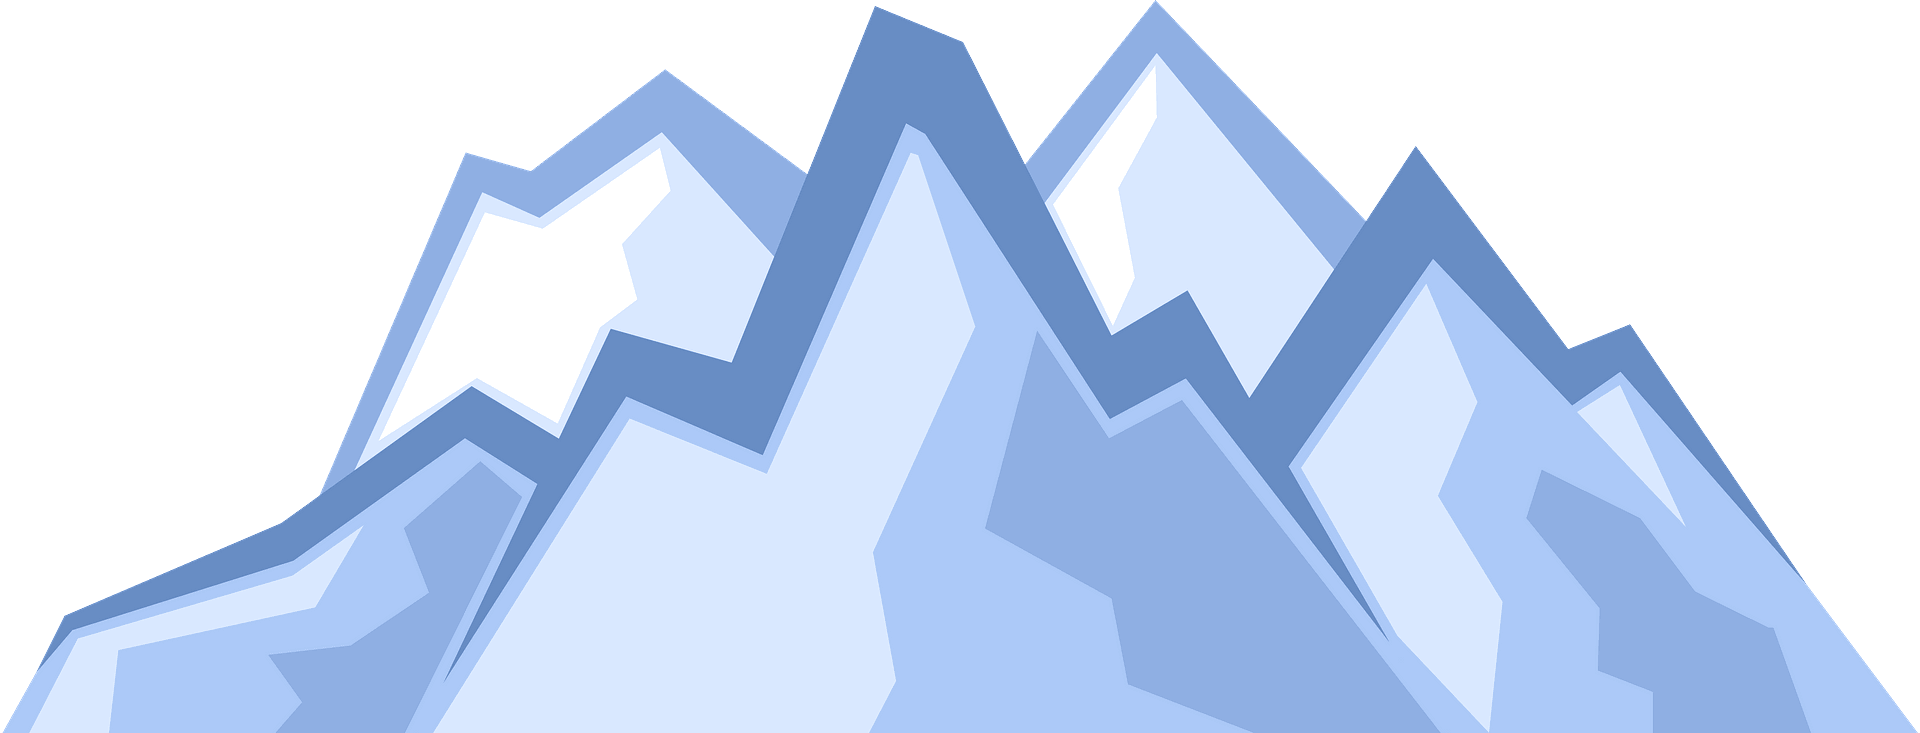 Mountain clipart transparent 4